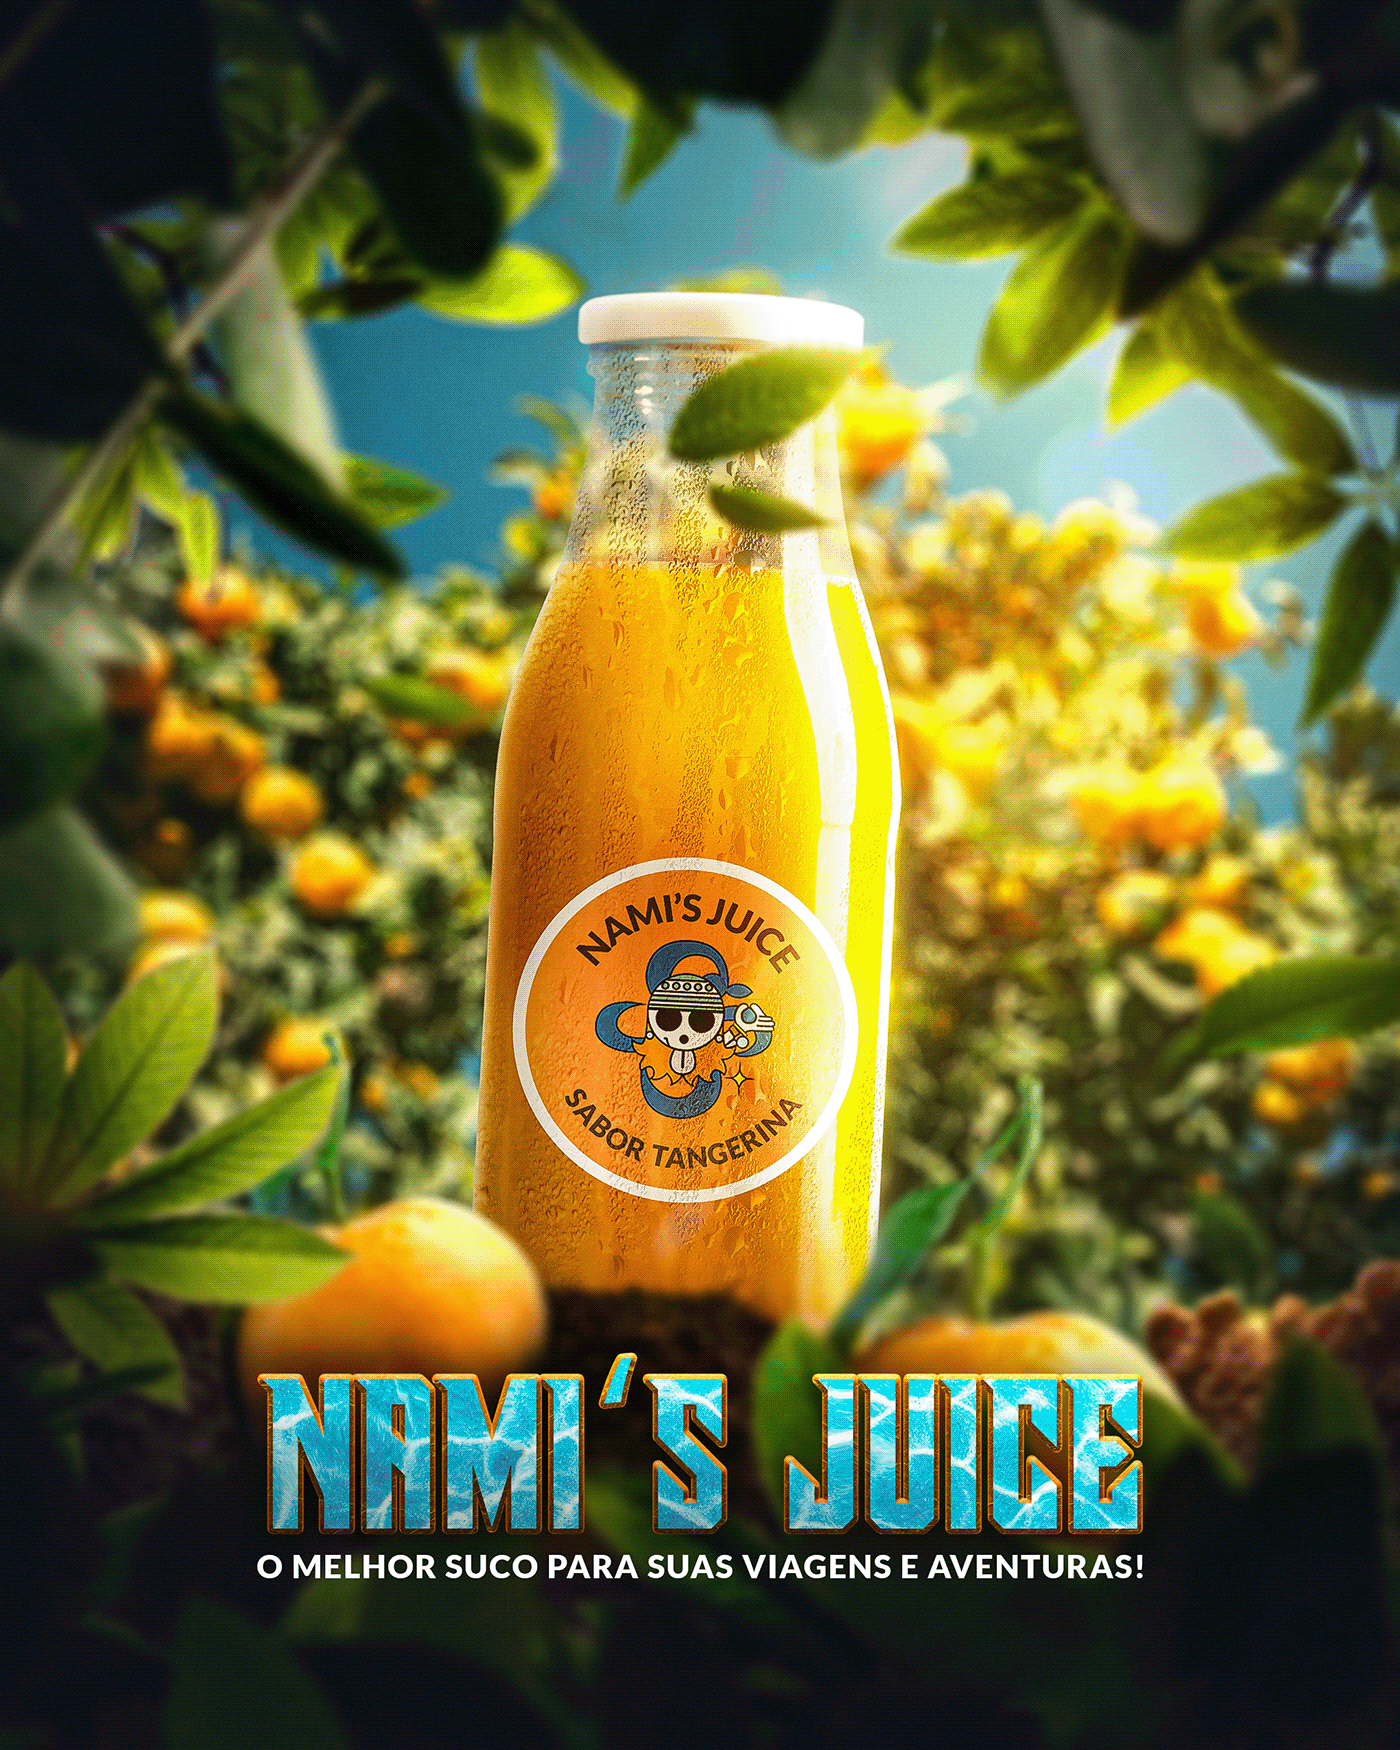 Fruit juice orange Nami one piece Photo Manipulation  Image Editing manipulation photomanipulation